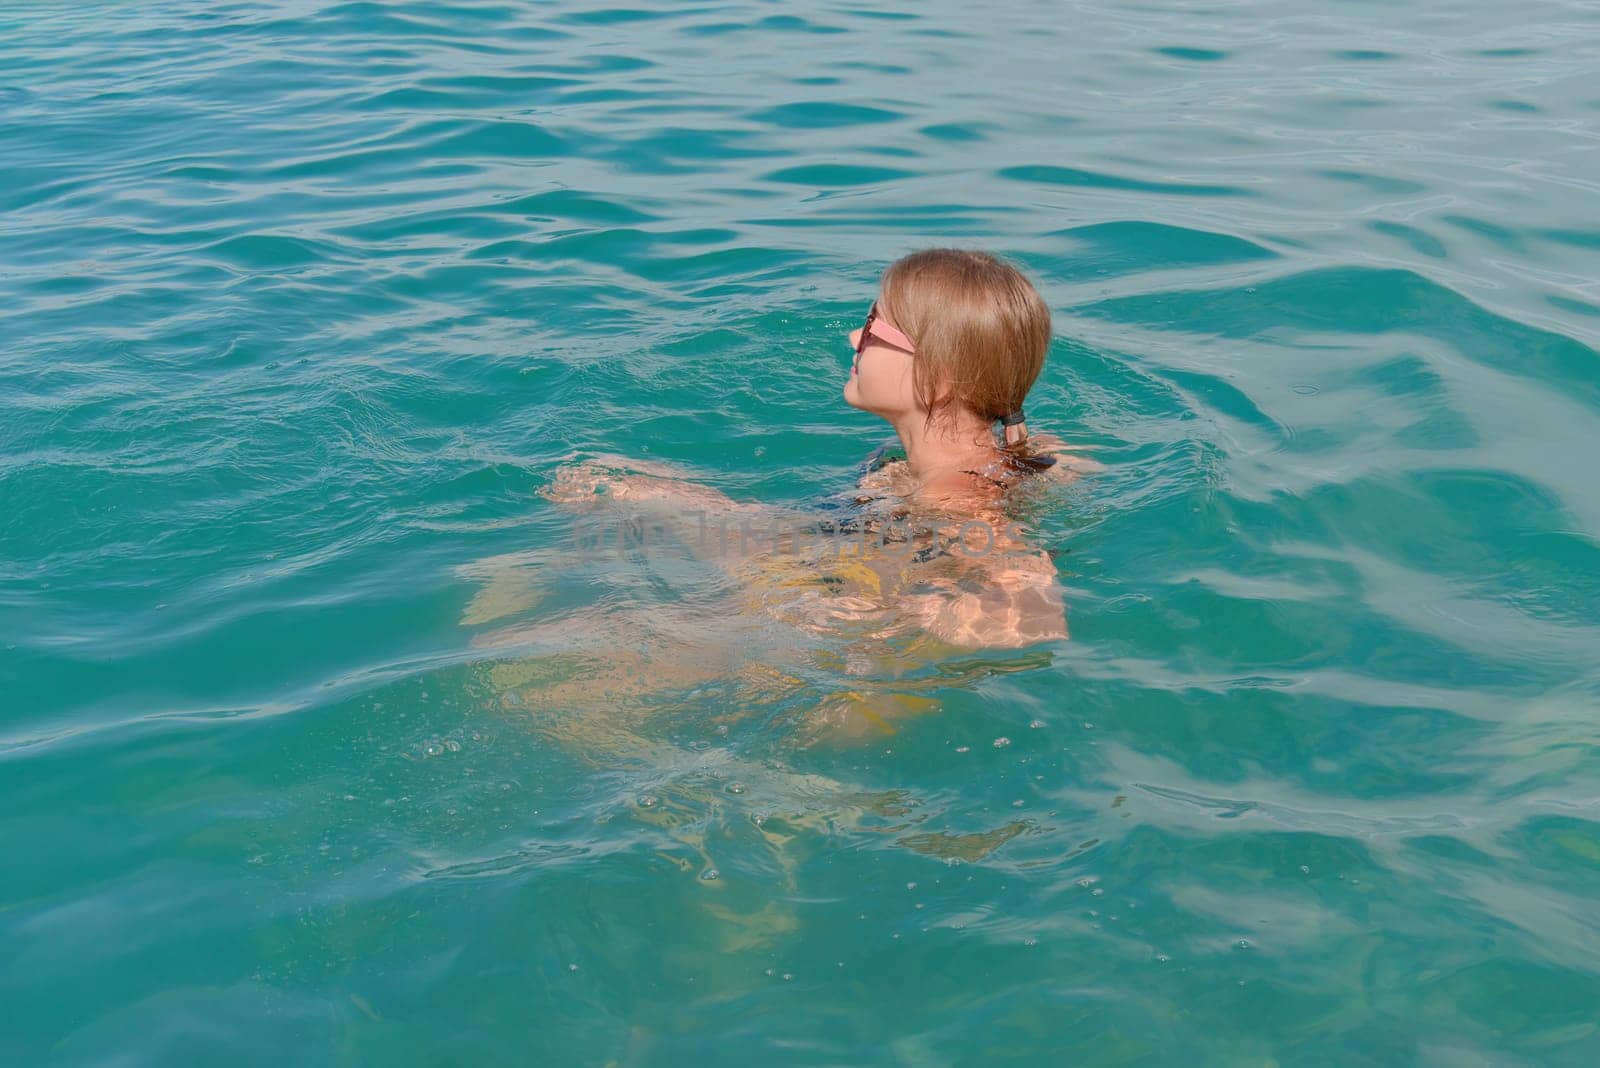 Teenage girl is in the water enjoying a sea holiday by AliaksandrFilimonau